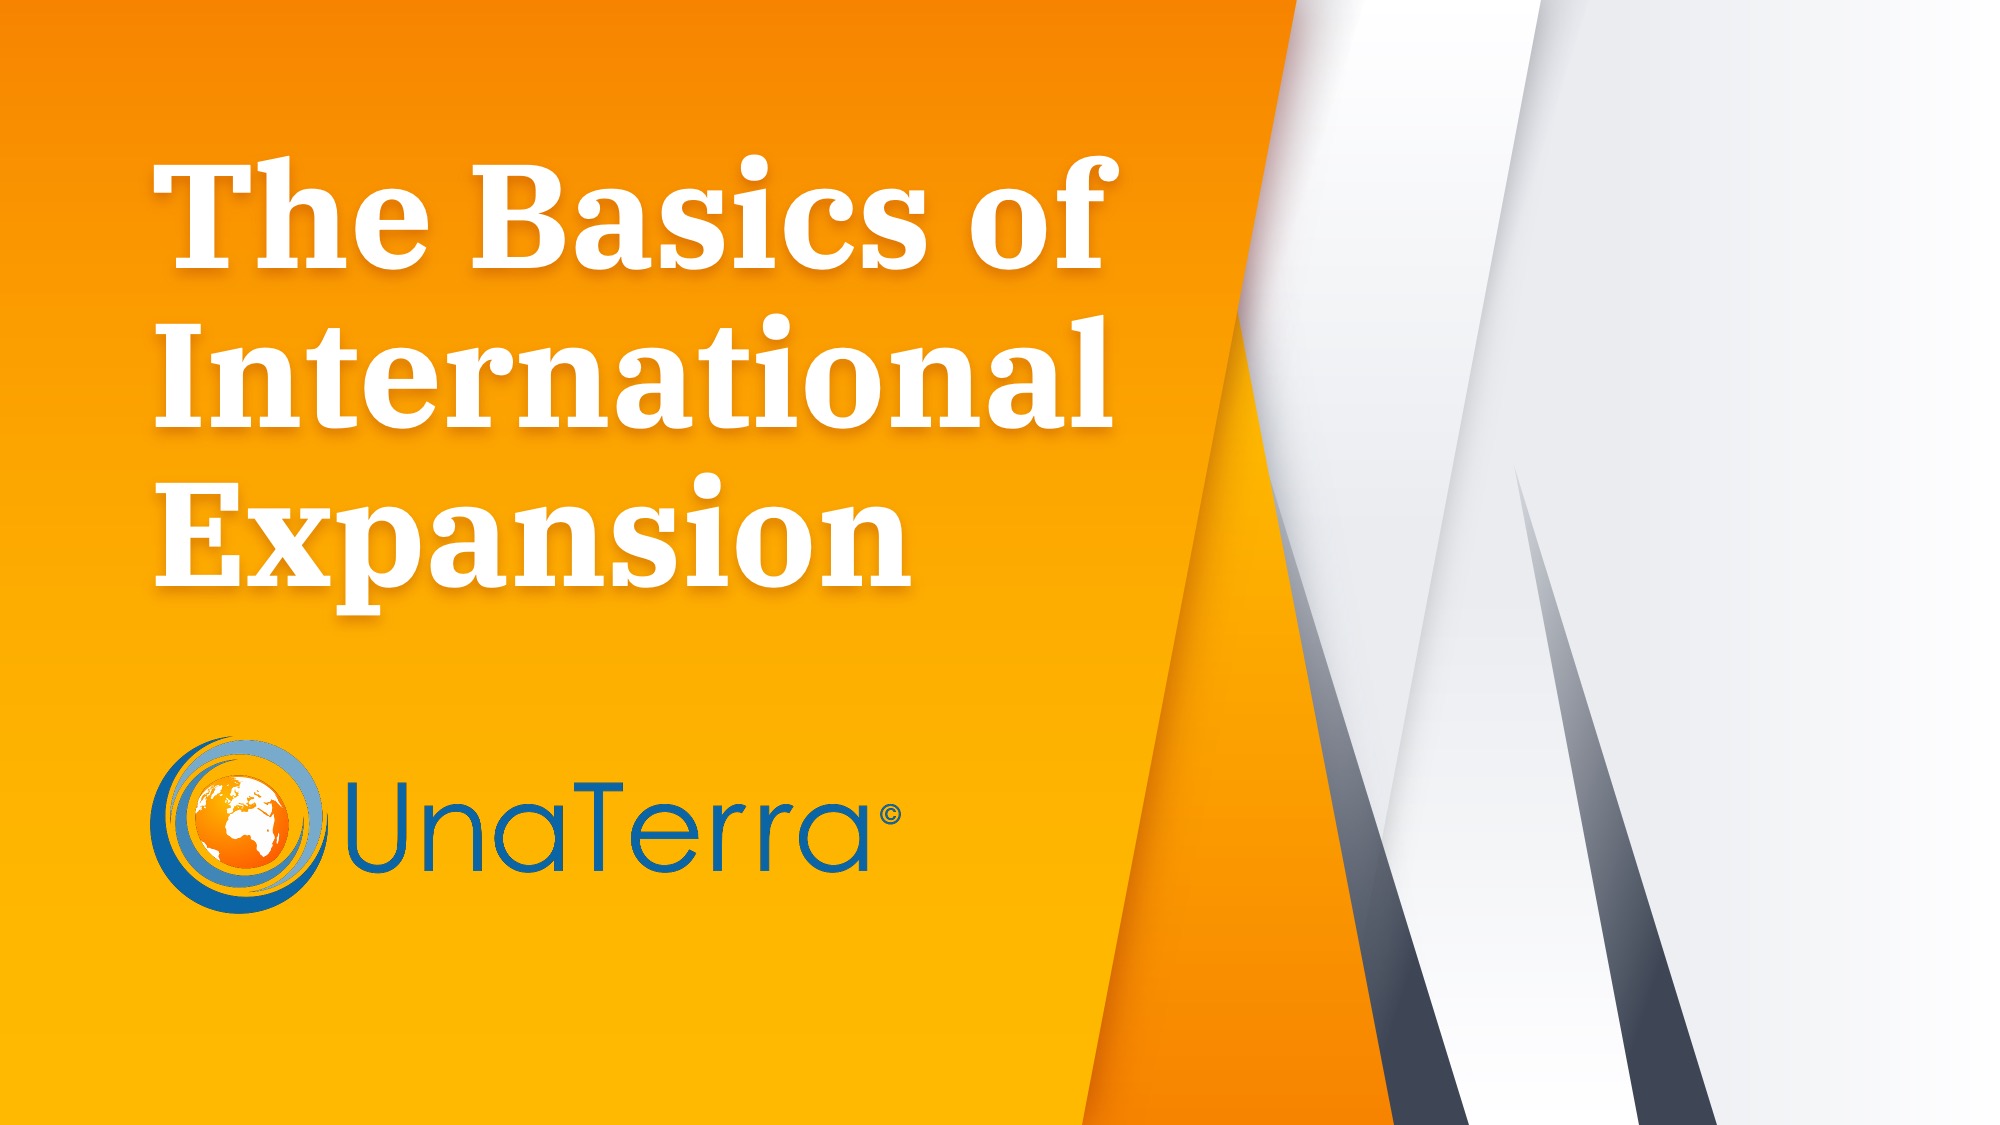 The basics of international expansion